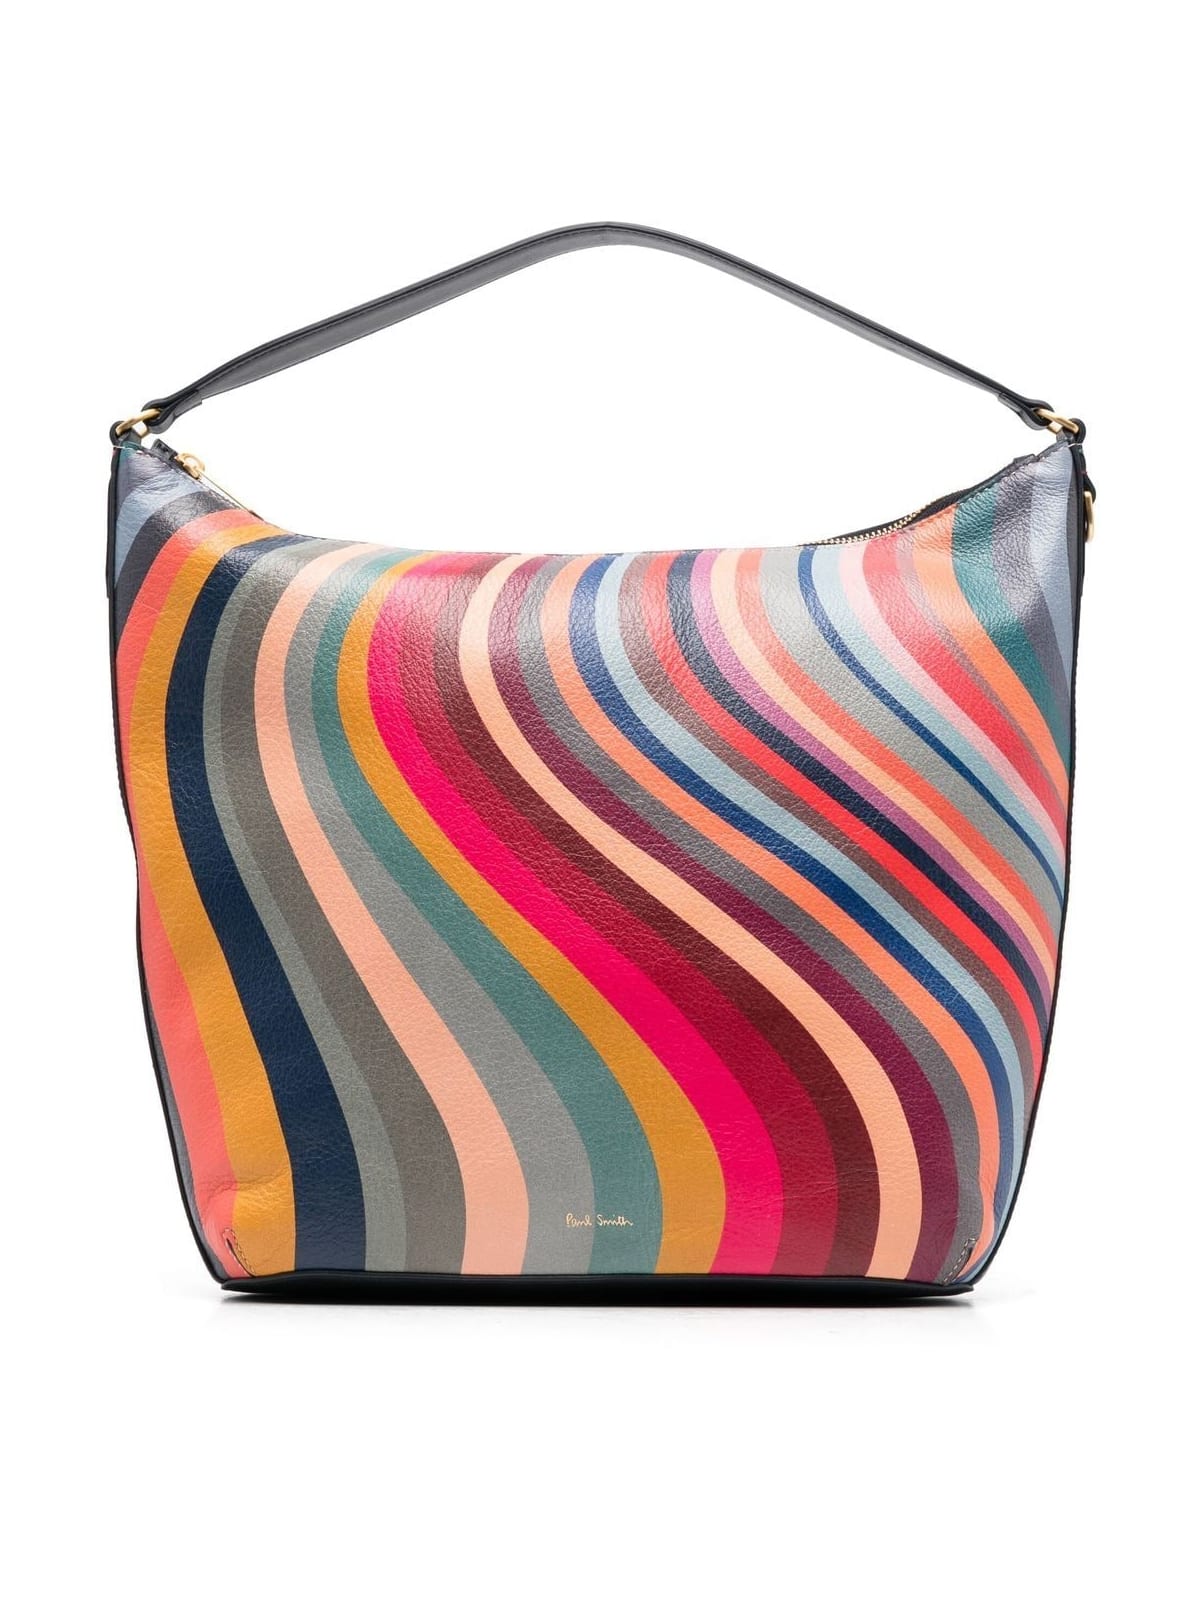 Paul Smith Multicolour Hobo Bag